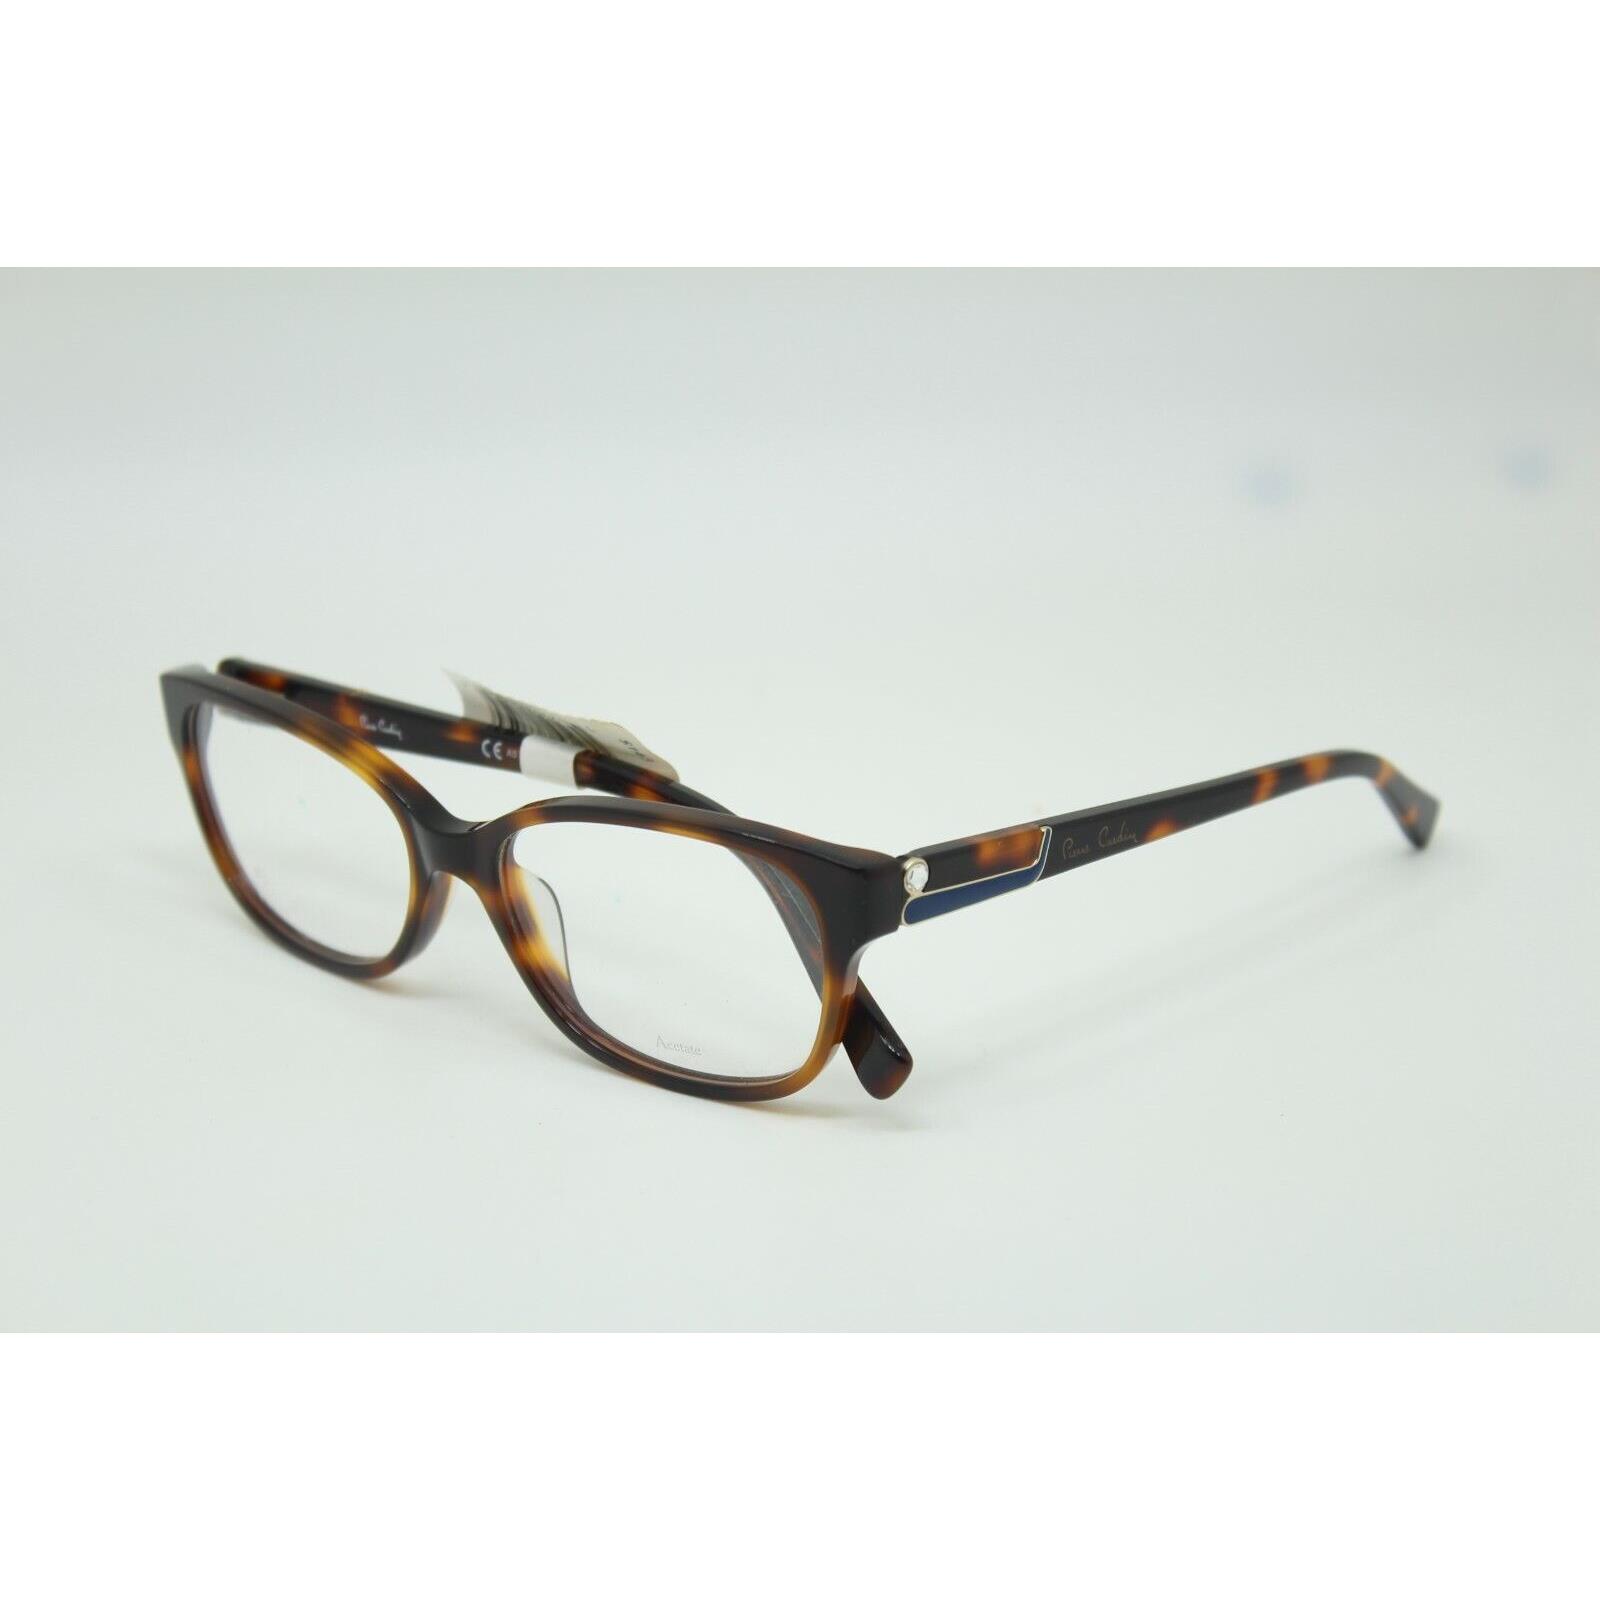 Pierre Cardin eyeglasses  - Havana , Havana Frame 4